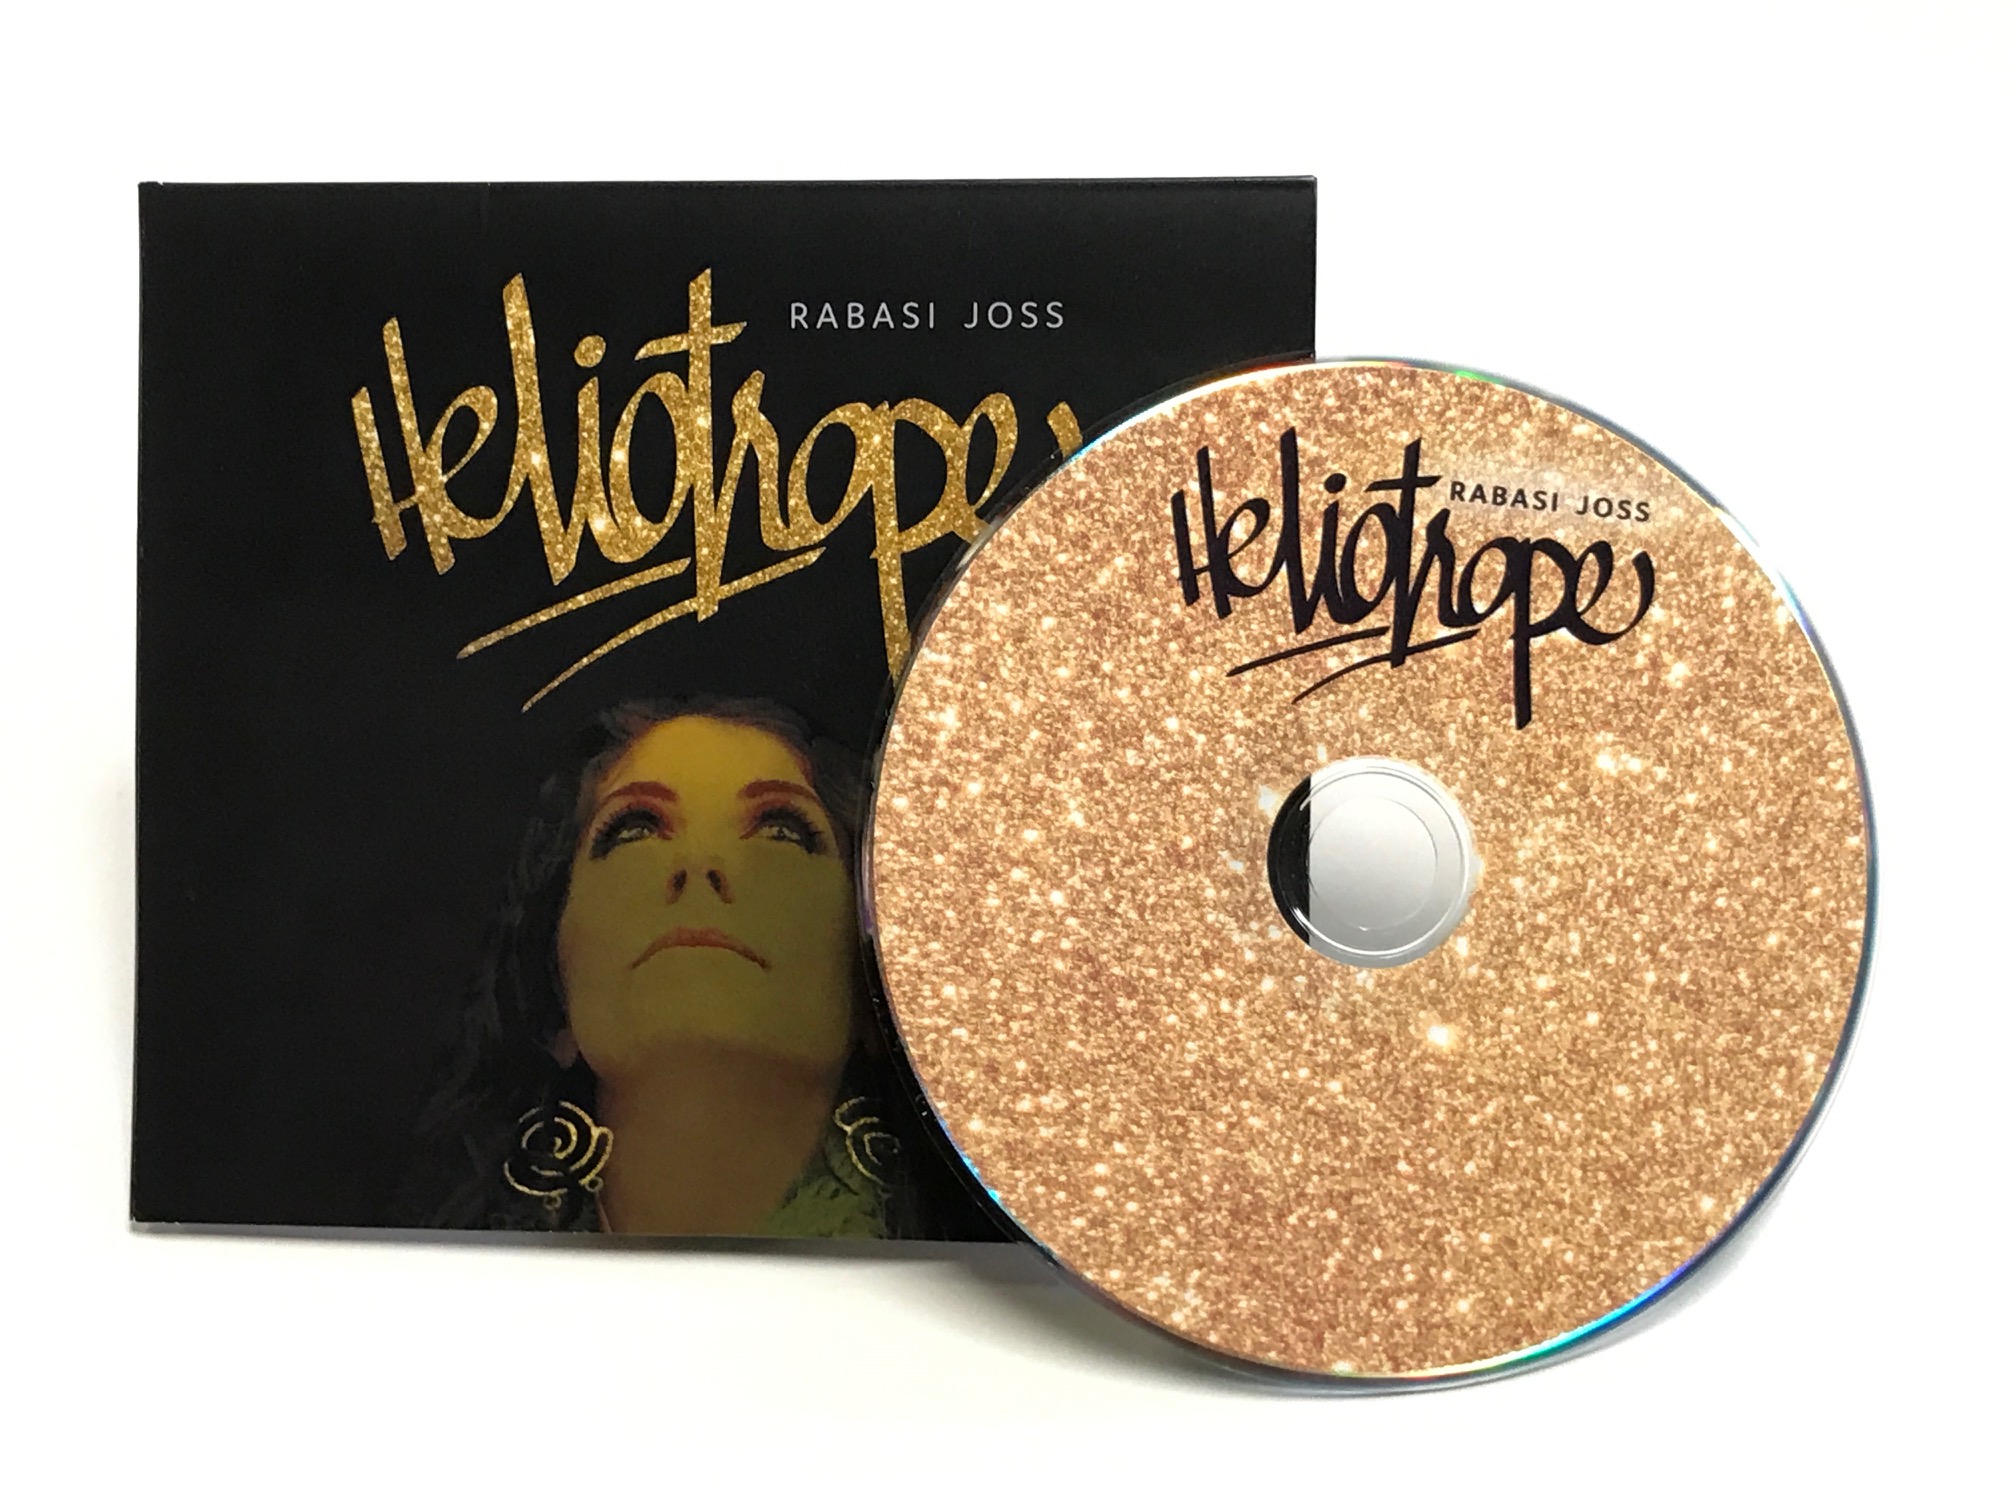 CD with disc.JPG